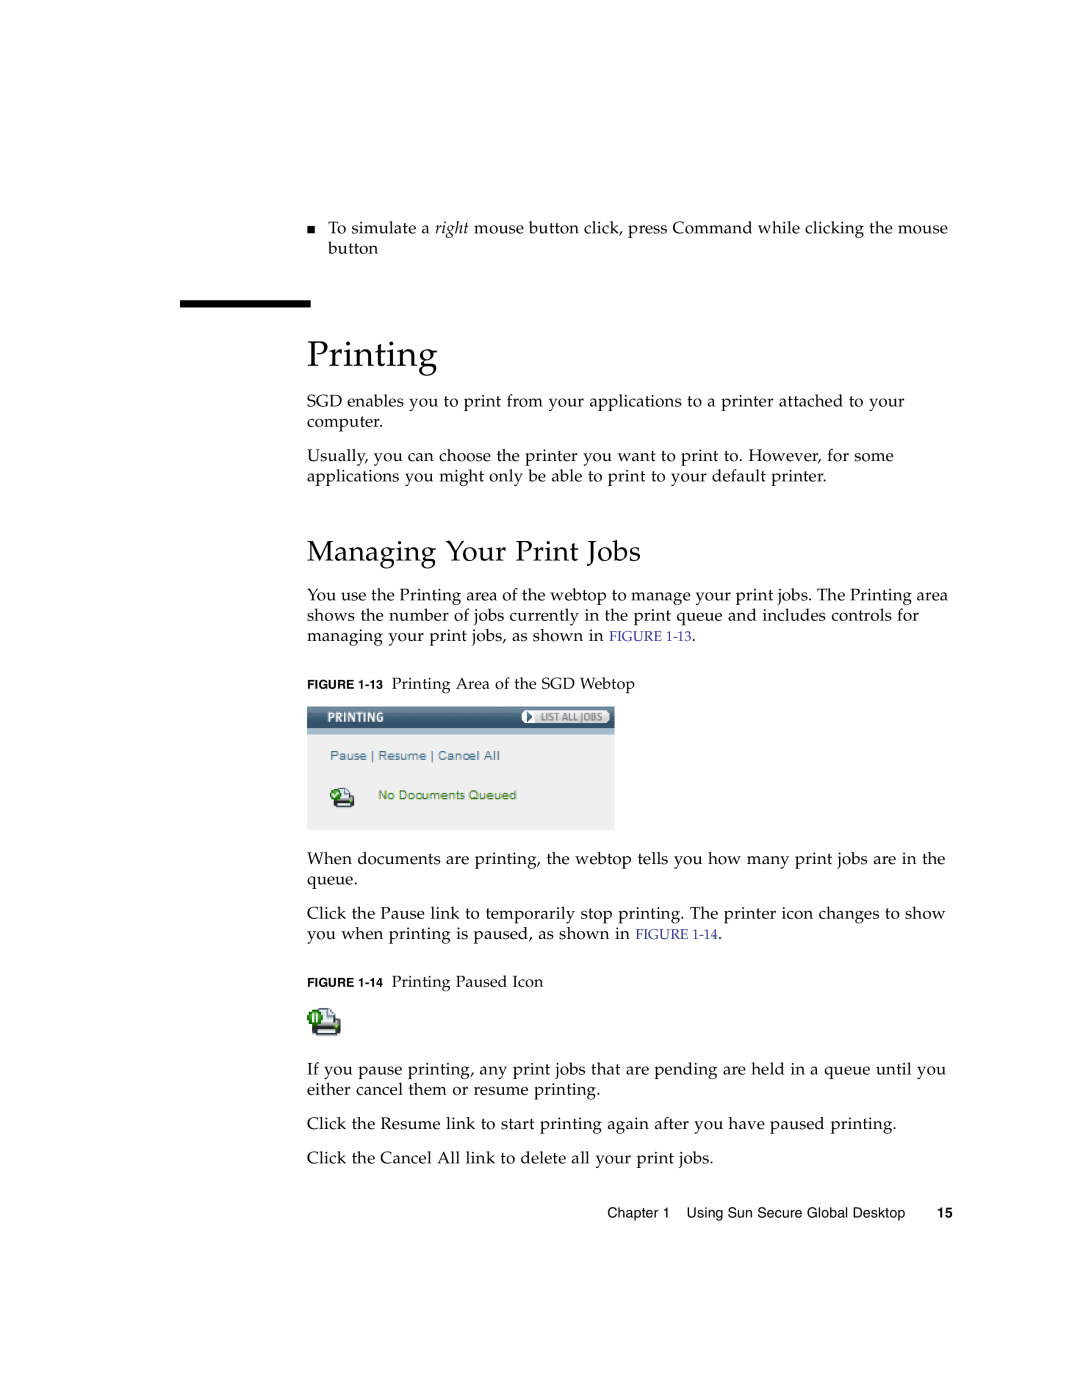 Sun Microsystems 4.5 manual Printing, Managing Your Print Jobs 